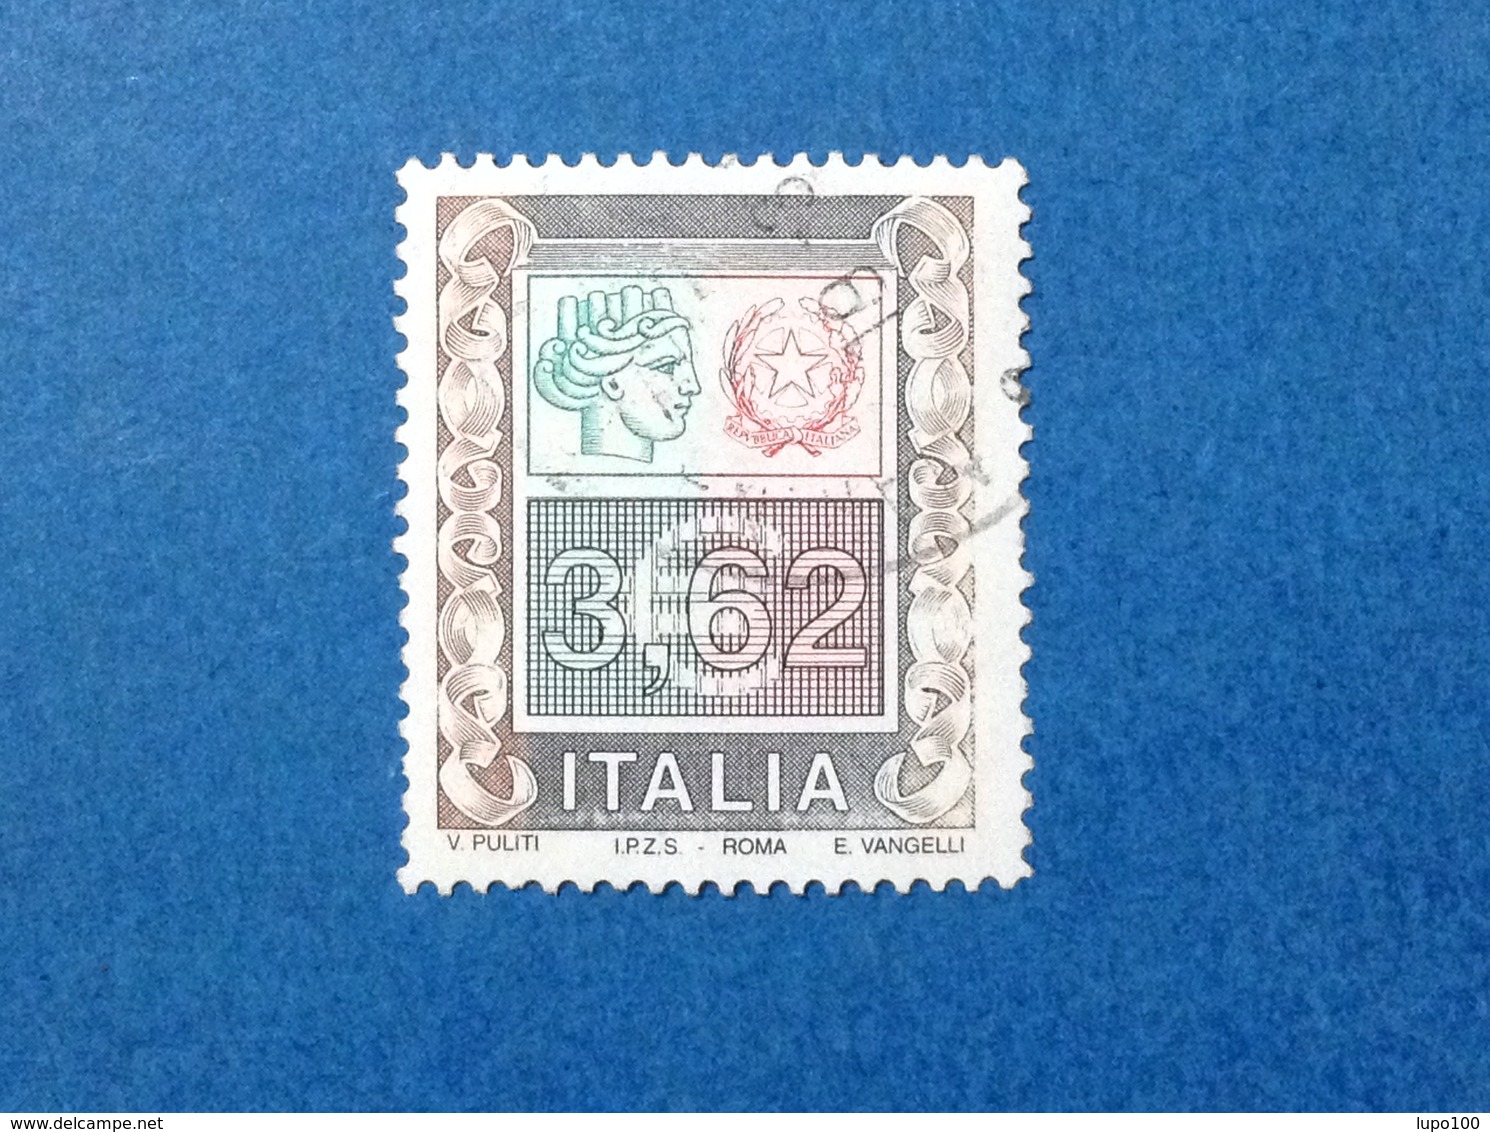 2002 ITALIA FRANCOBOLLO USATO ITALY STAMP USED ALTI VALORI ALTO VALORE 3,62 - 2001-10: Gebraucht